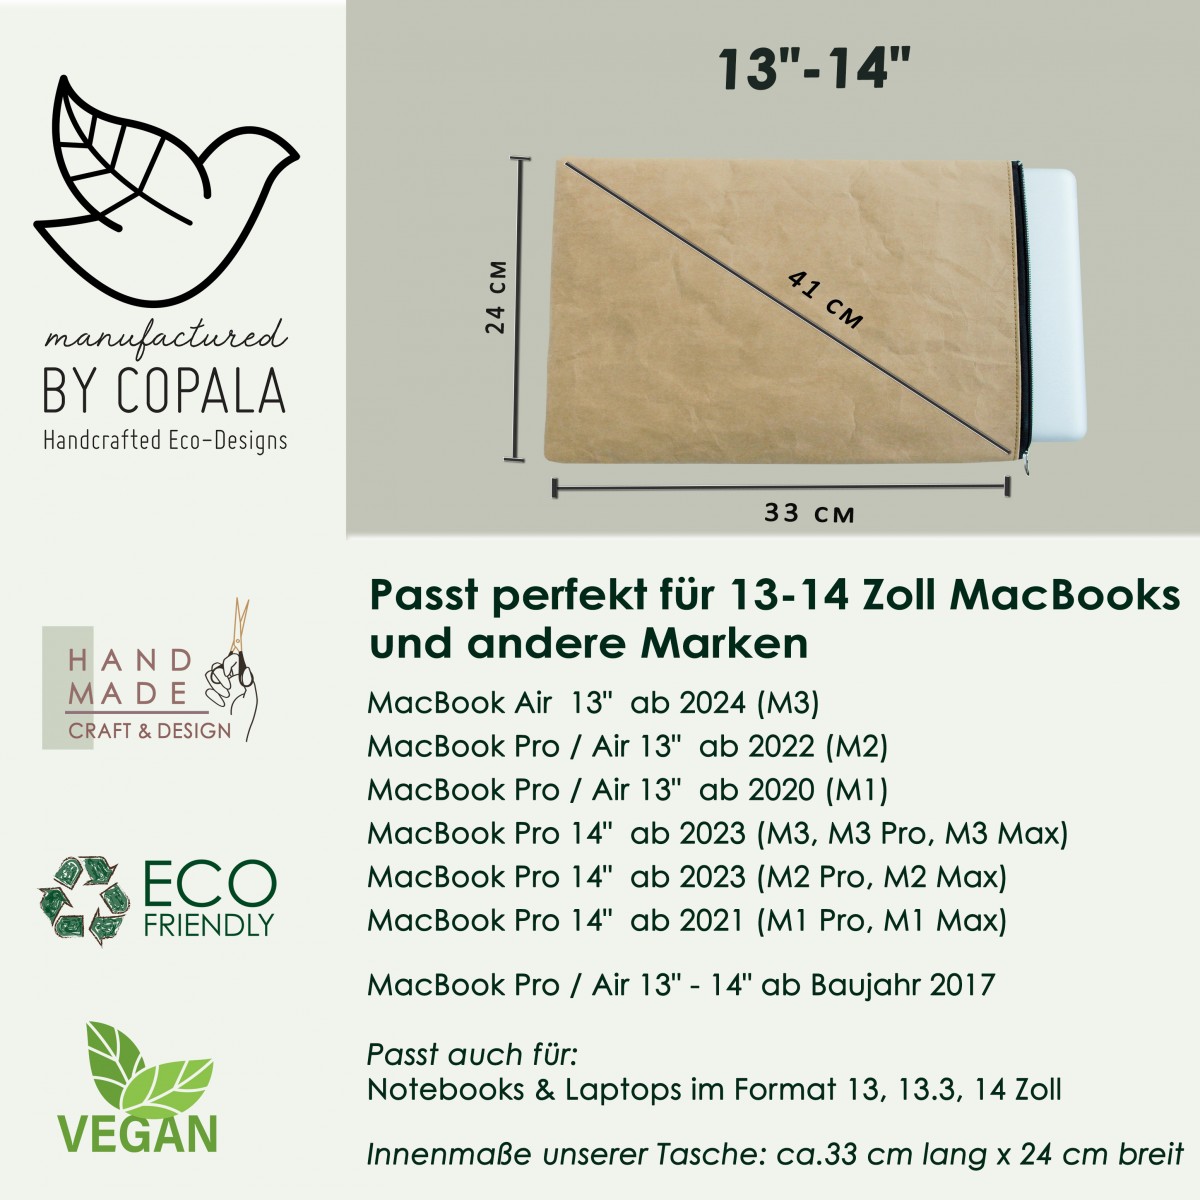  Laptop-Hülle, gepolsterte MacBook Tasche 13 " - 14 " Zoll aus Kraft Papier BY COPALA